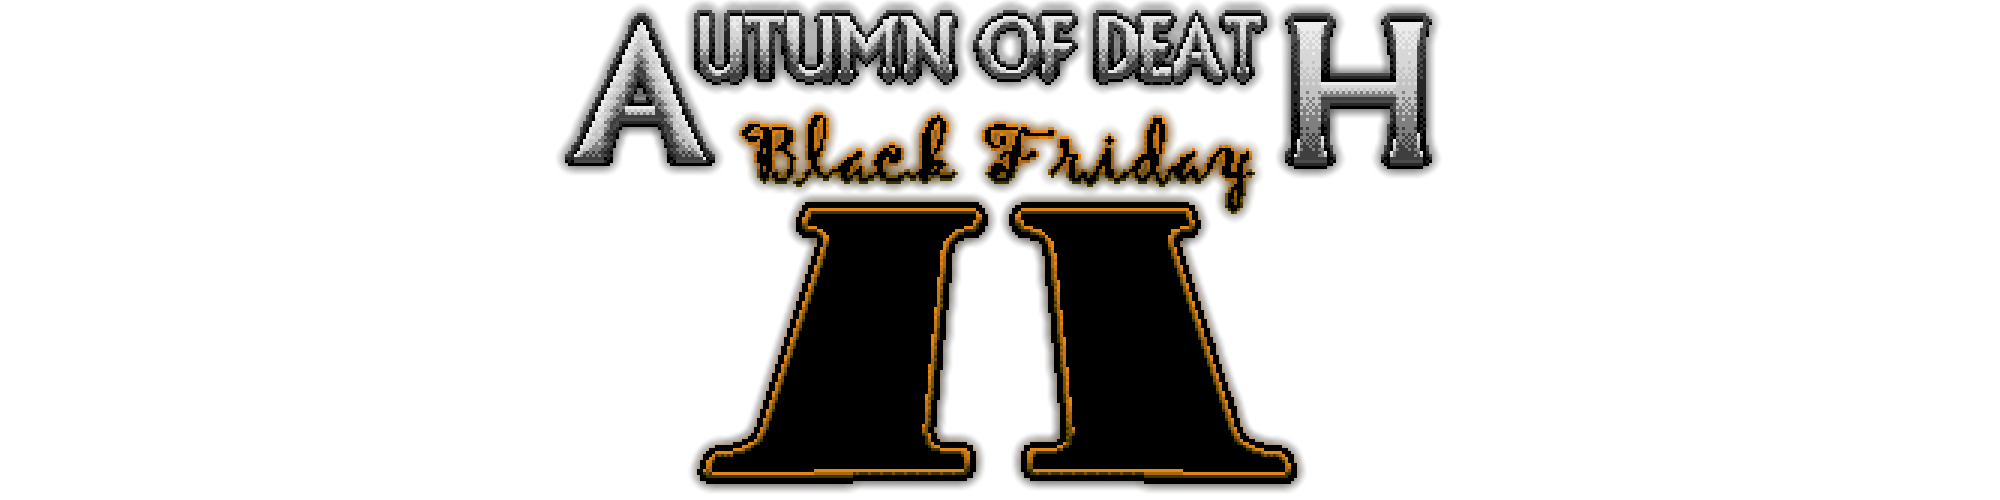 Autumn of Death: Black Friday II